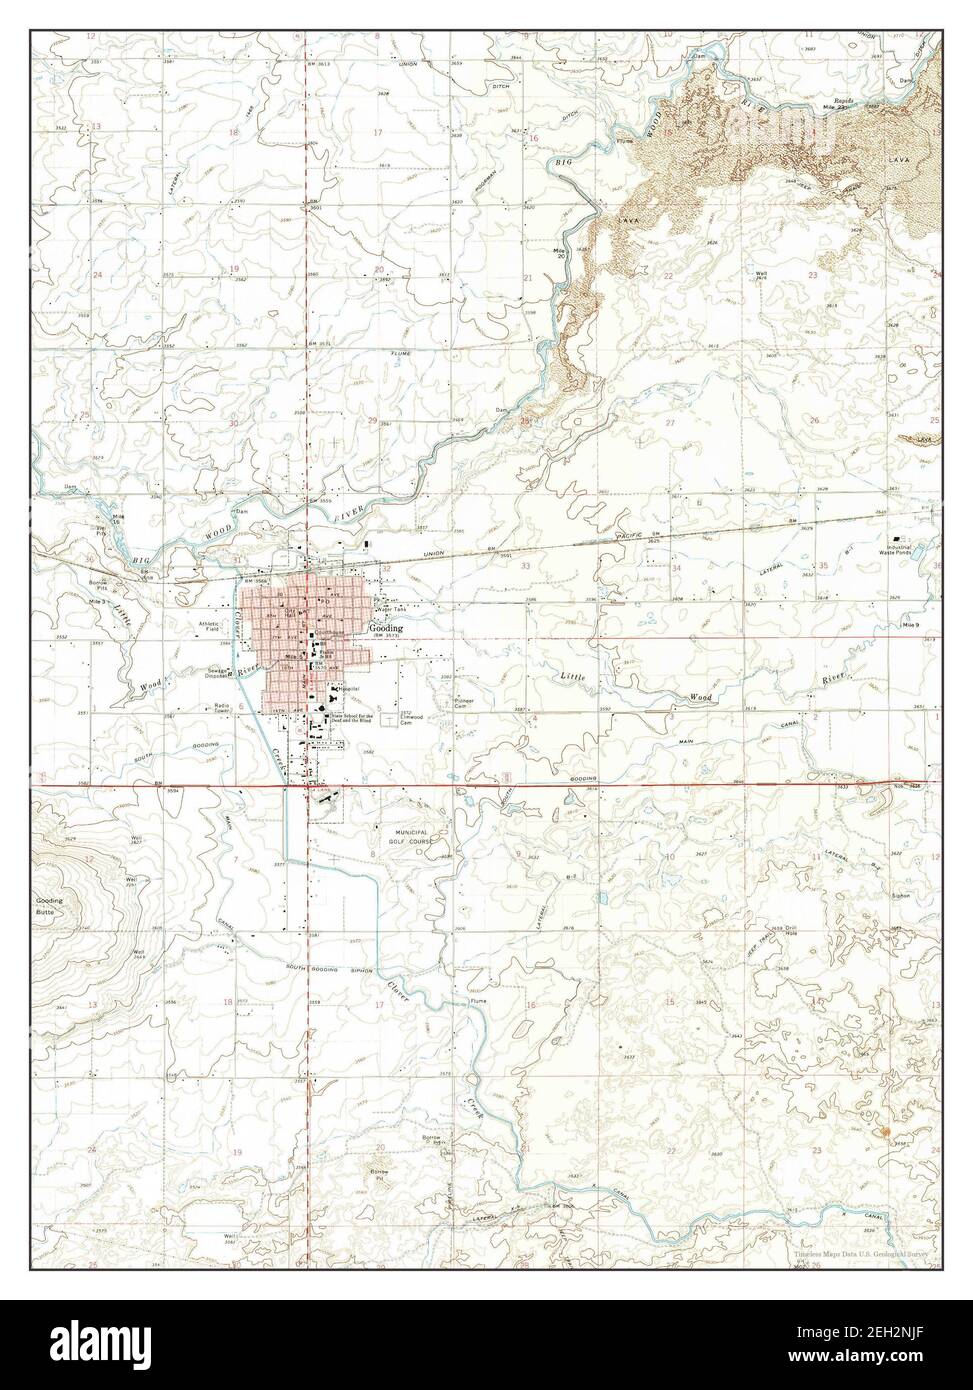 Gooding, Idaho, map 1971, 1:24000, United States of America by Timeless Maps, data U.S. Geological Survey Stock Photo